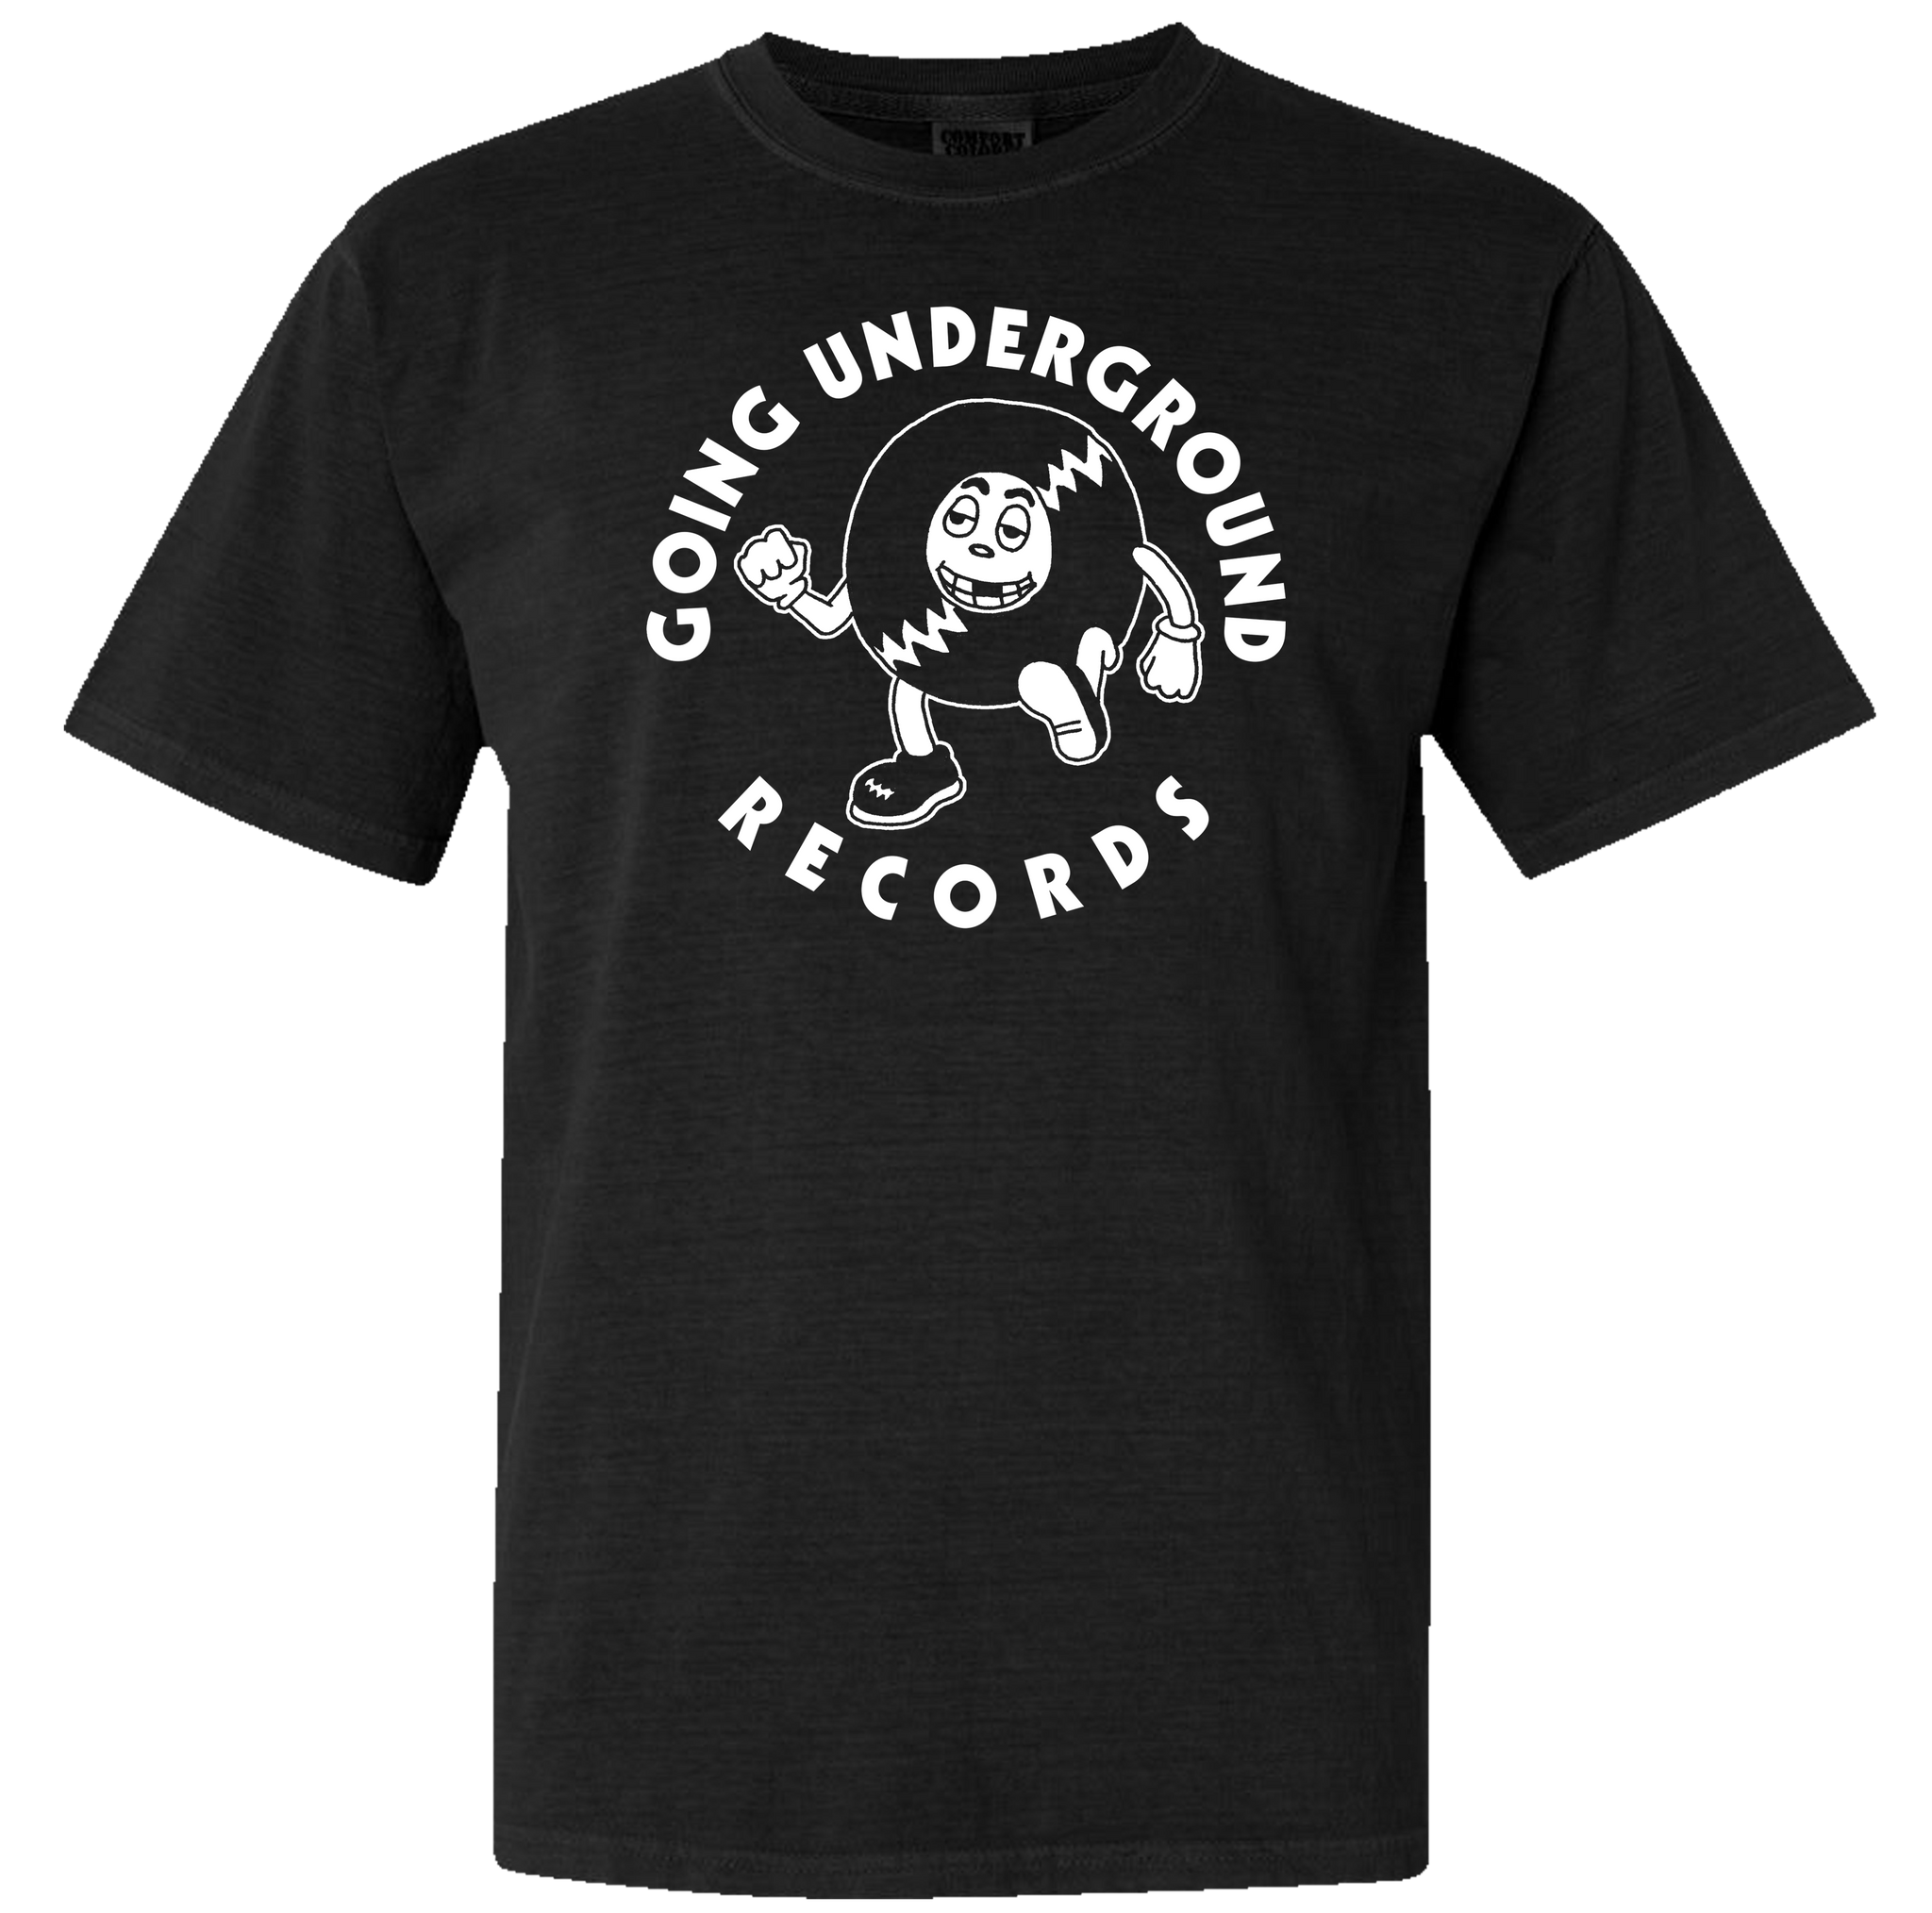 GOING UNDERGROUND - CLASSIC RECORD BOY Shirt